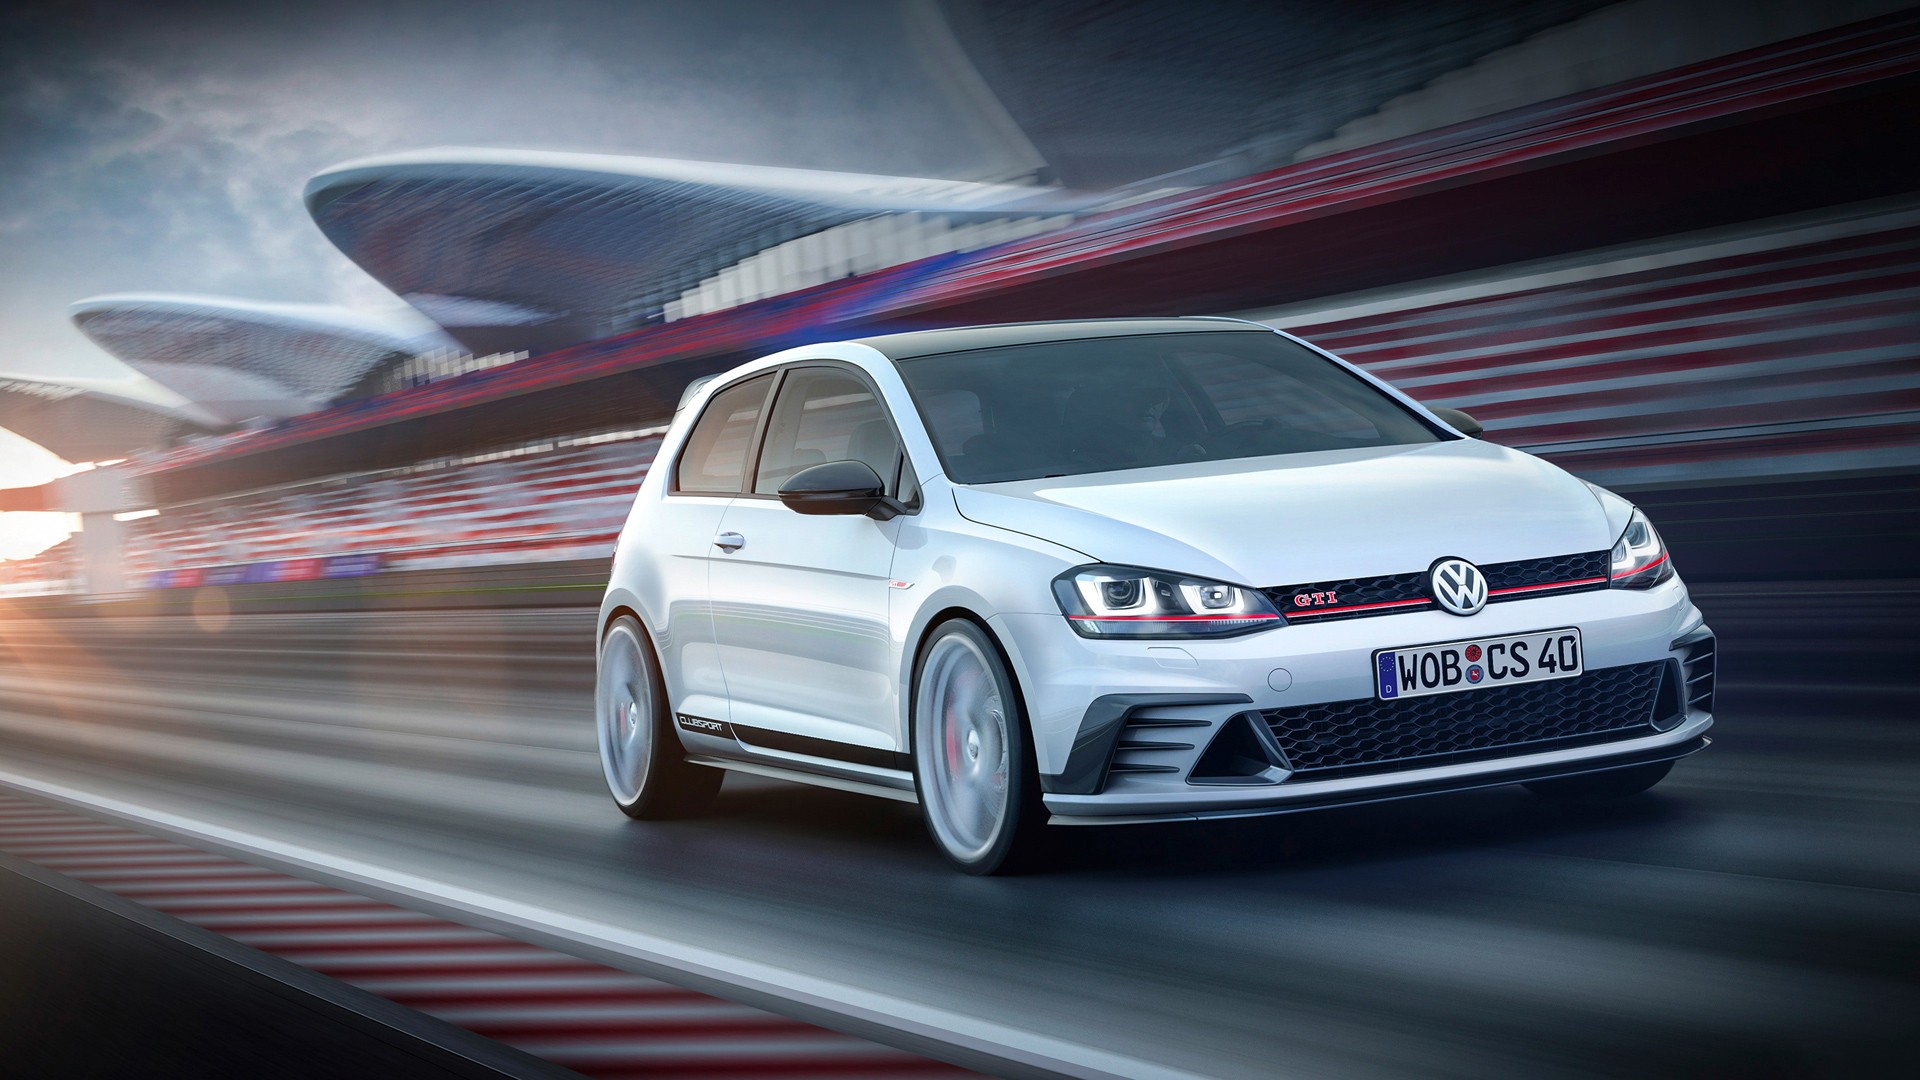 Volkswagen Golf GTI, Car Wallpapers HD / Desktop and Mobile Backgrounds